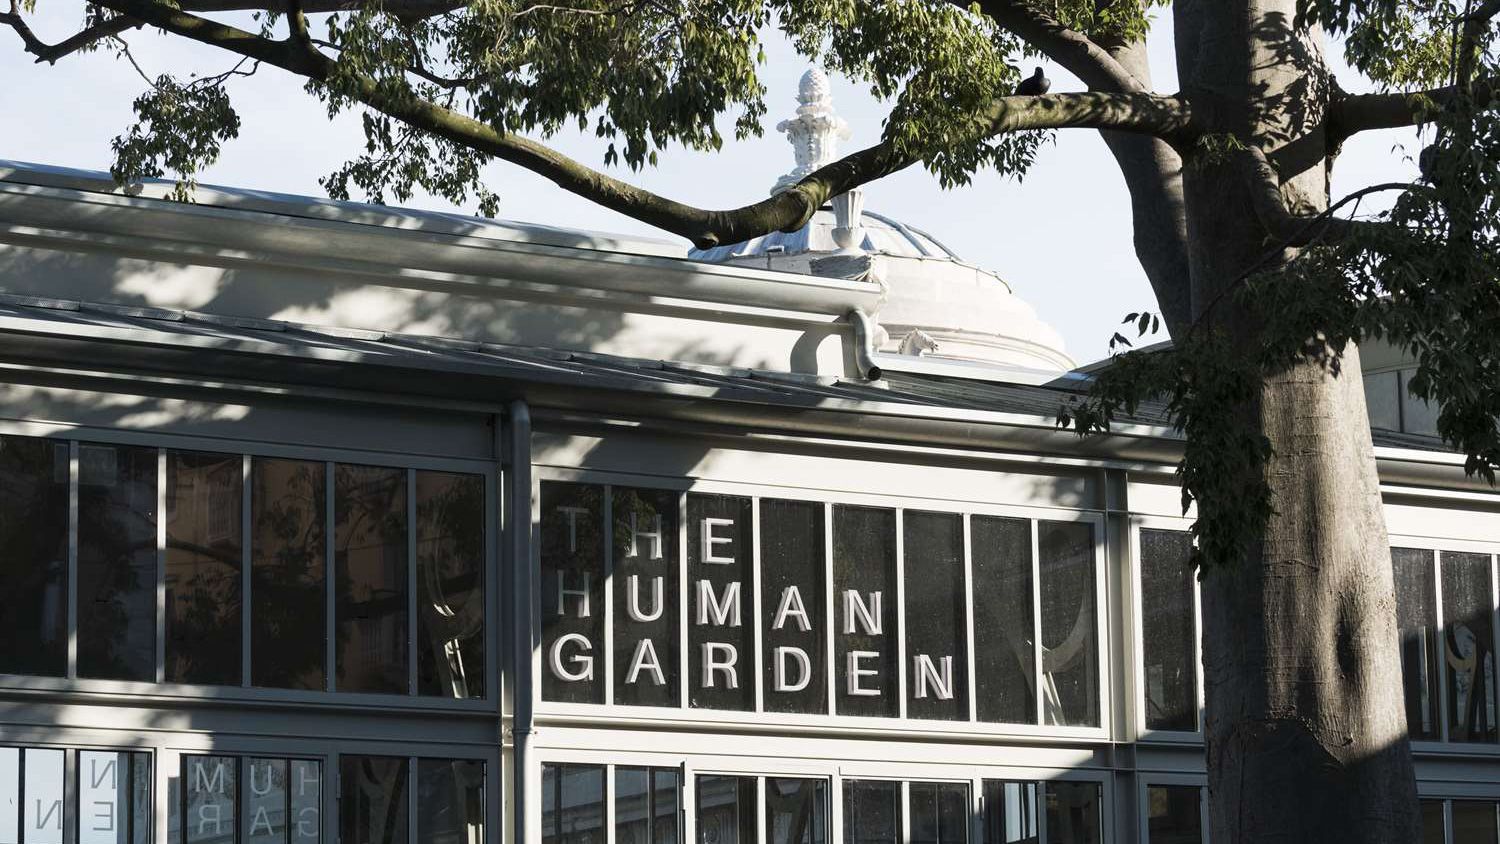 Venice Royal Gardens receive the European Prize for Cultural Heritage / Europa Nostra Award 2023 - Greenhouse